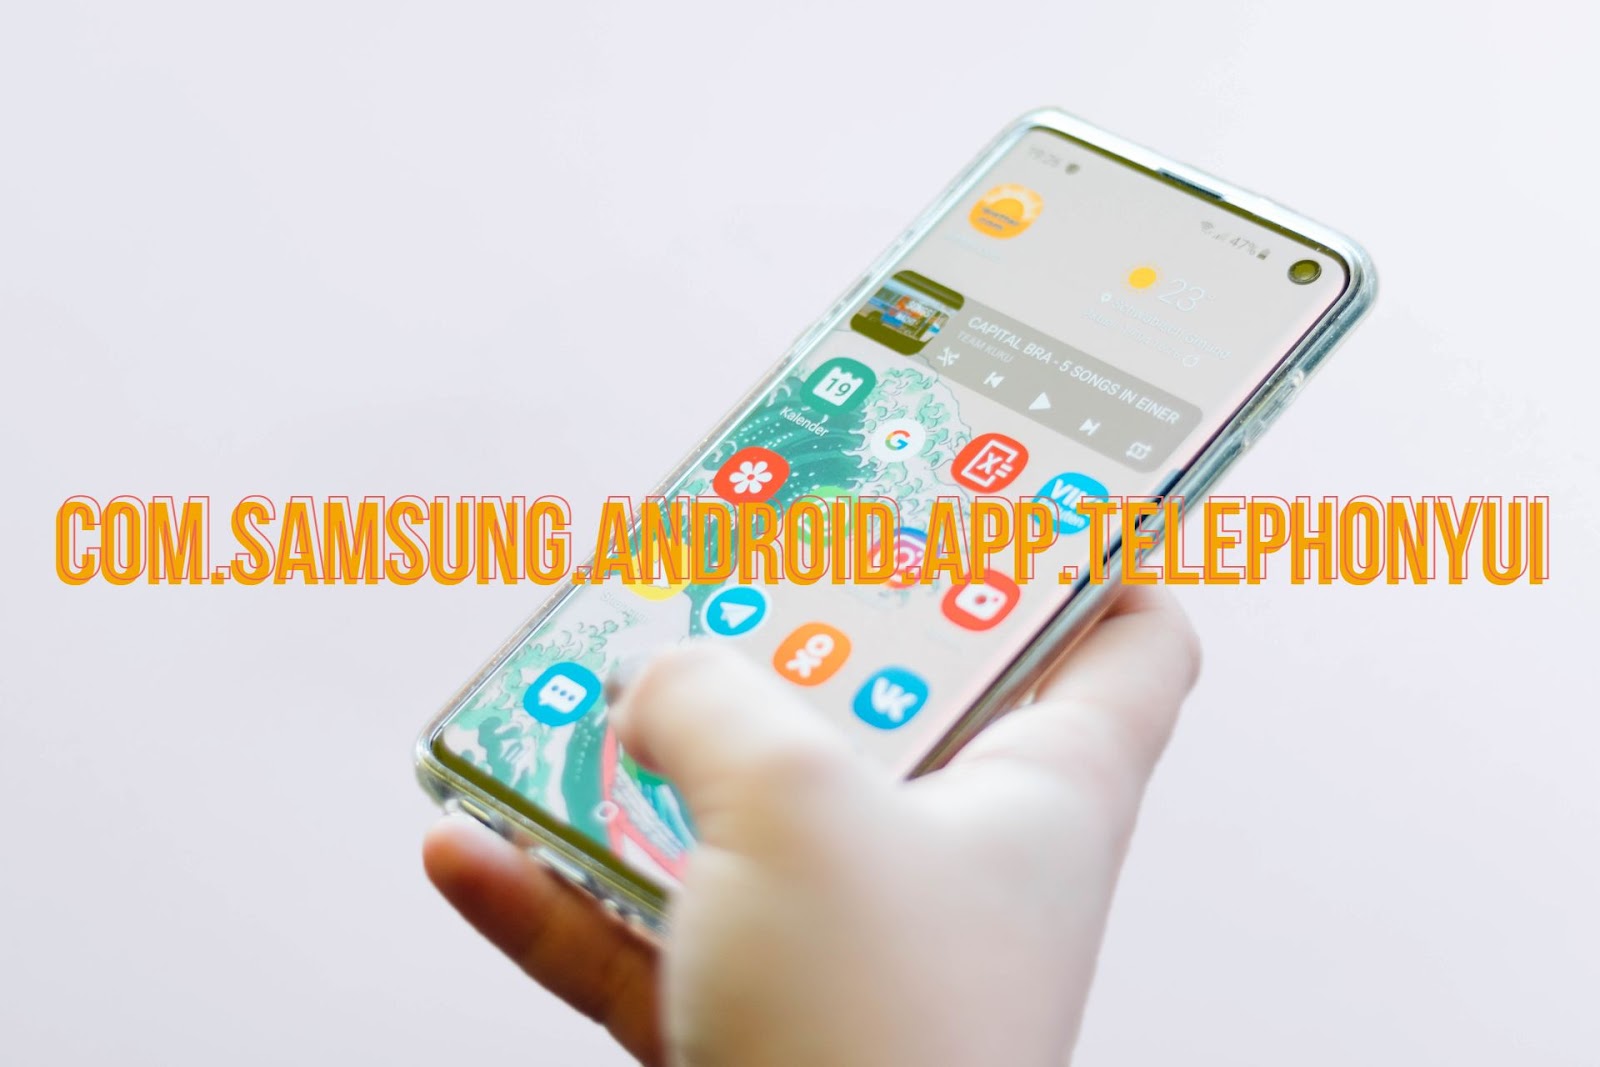 com.samsung.android.app.telephonyui